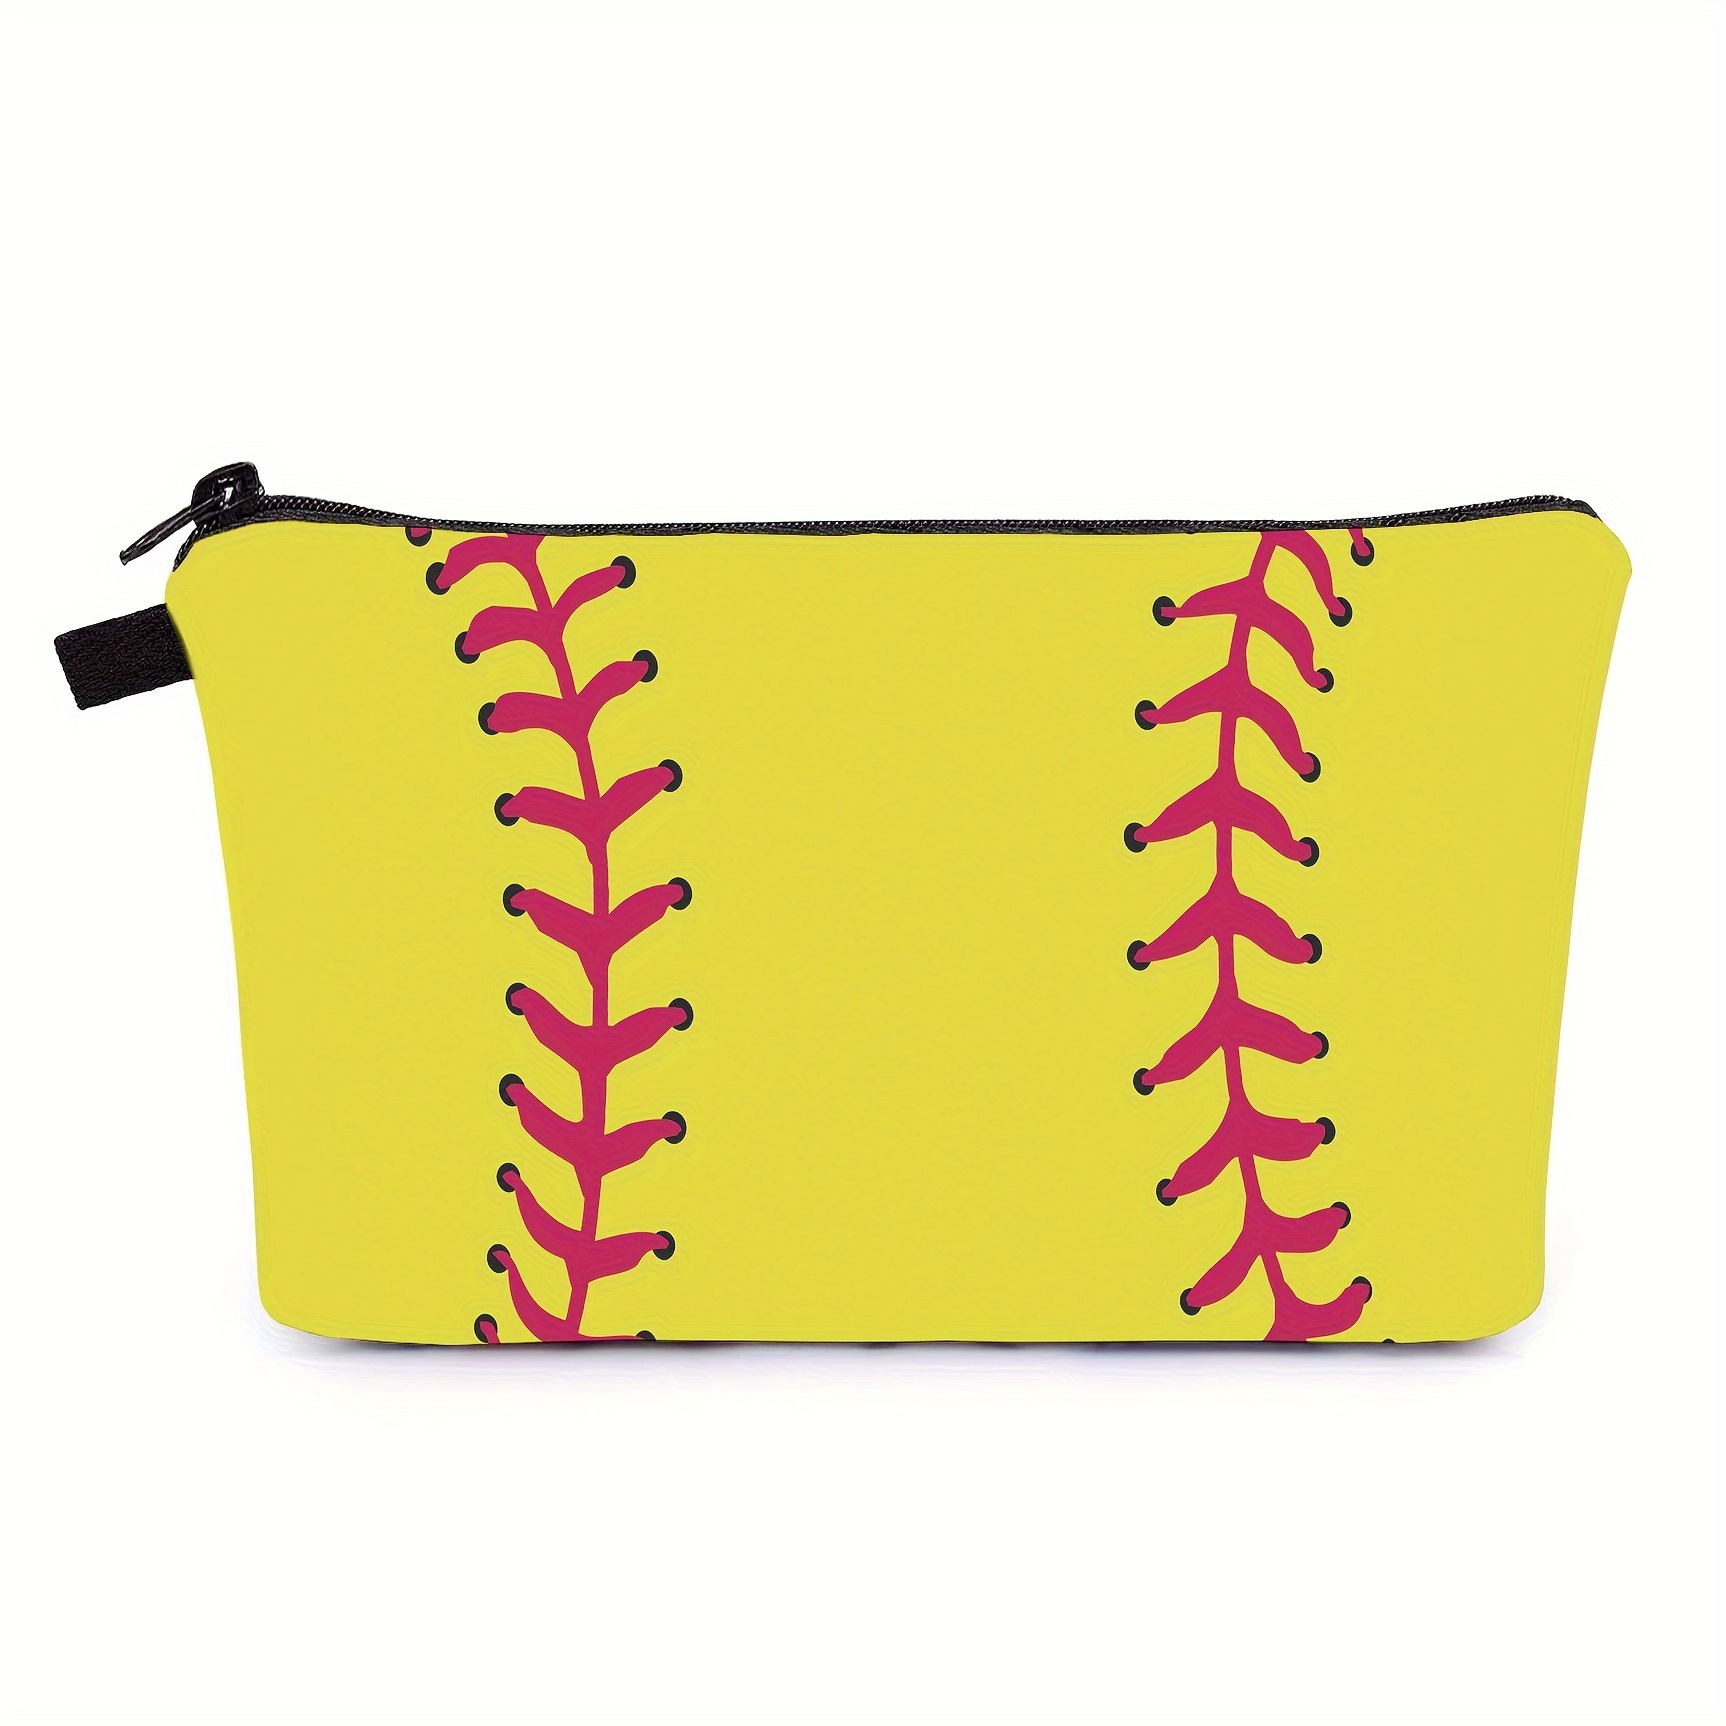 

Softball Gifts Makeup Bag Cosmetic Bag For Women, Birthday Gifts For Softball Lovers Players Fans Female Friend, Softball Gifts For Team Women Softball Stuff